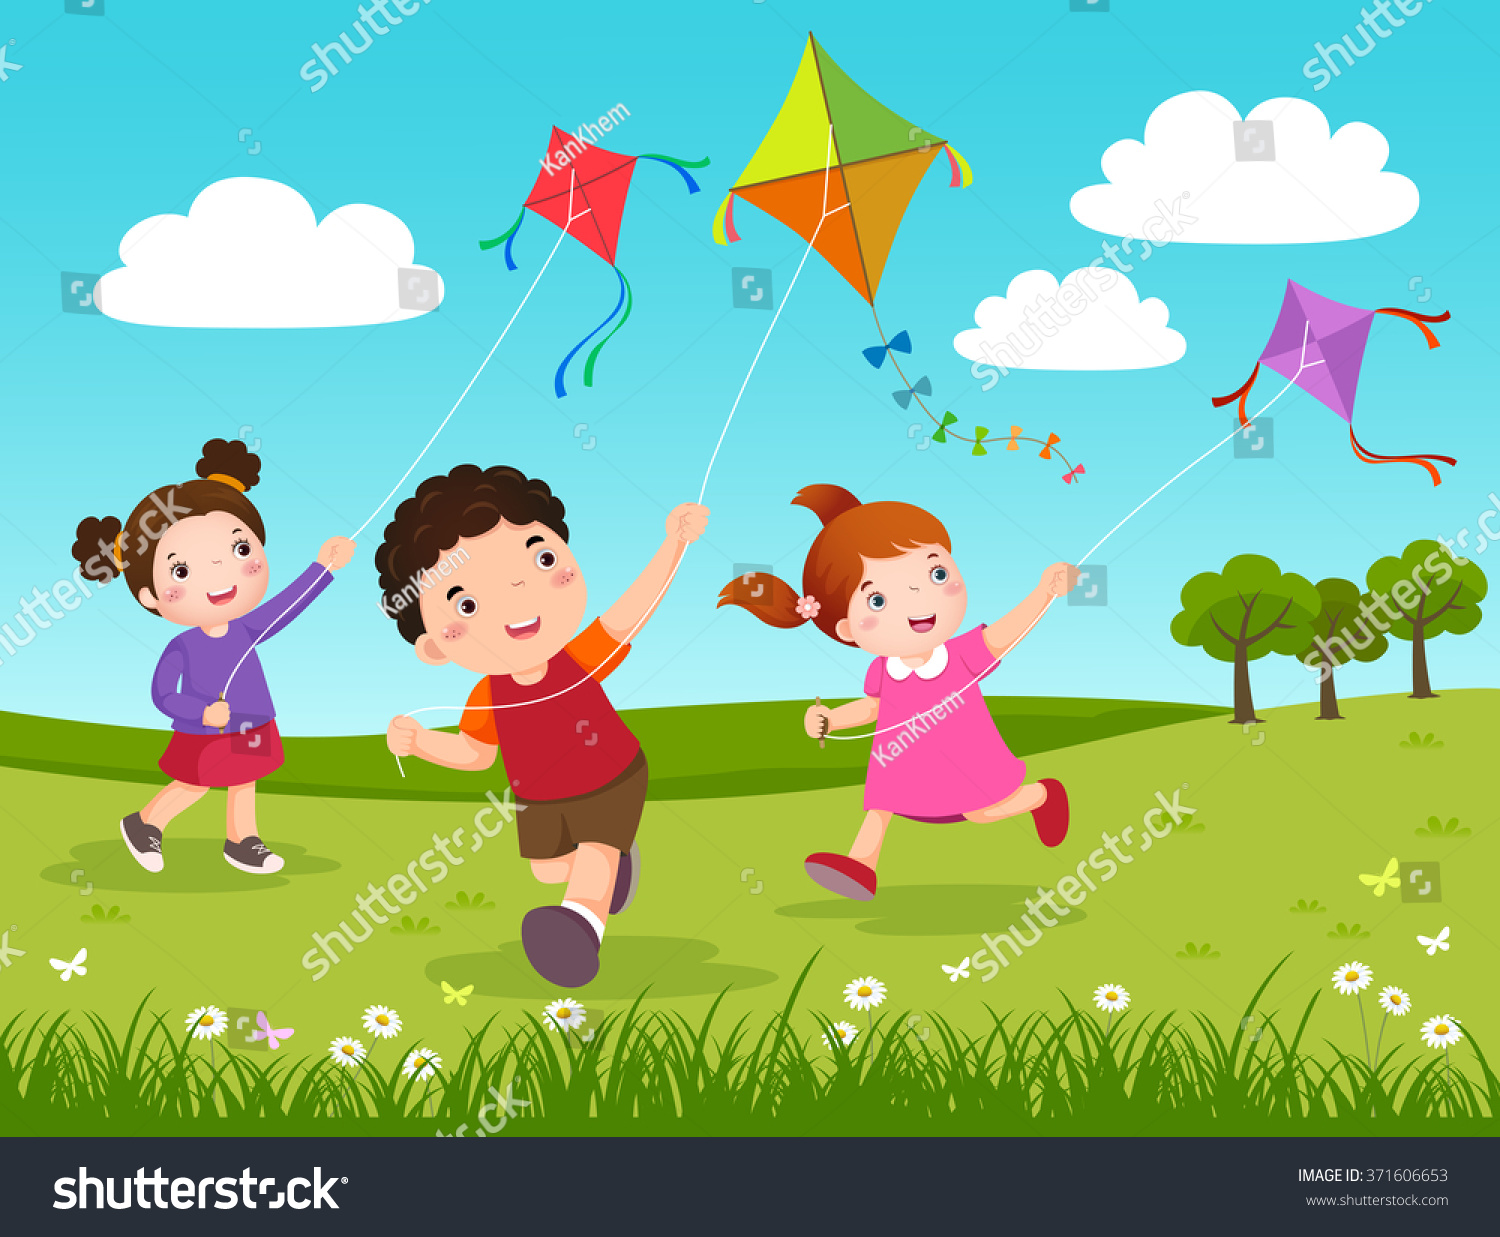 SVG of Vector Illustration of three kids flying kites in the park svg